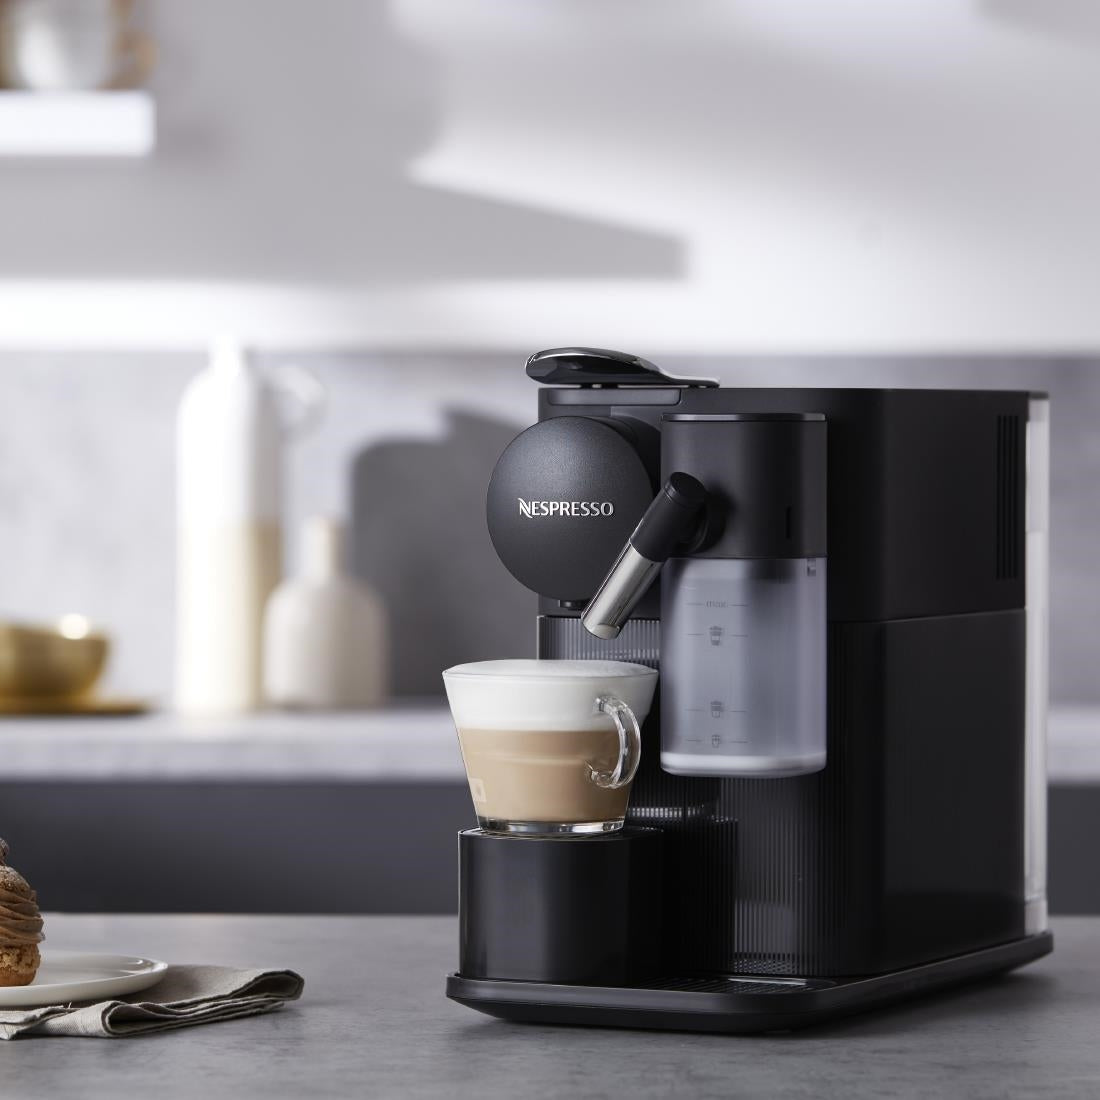 FT896 DeLonghi Nespresso Lattissima One Coffee Machine Black JD Catering Equipment Solutions Ltd